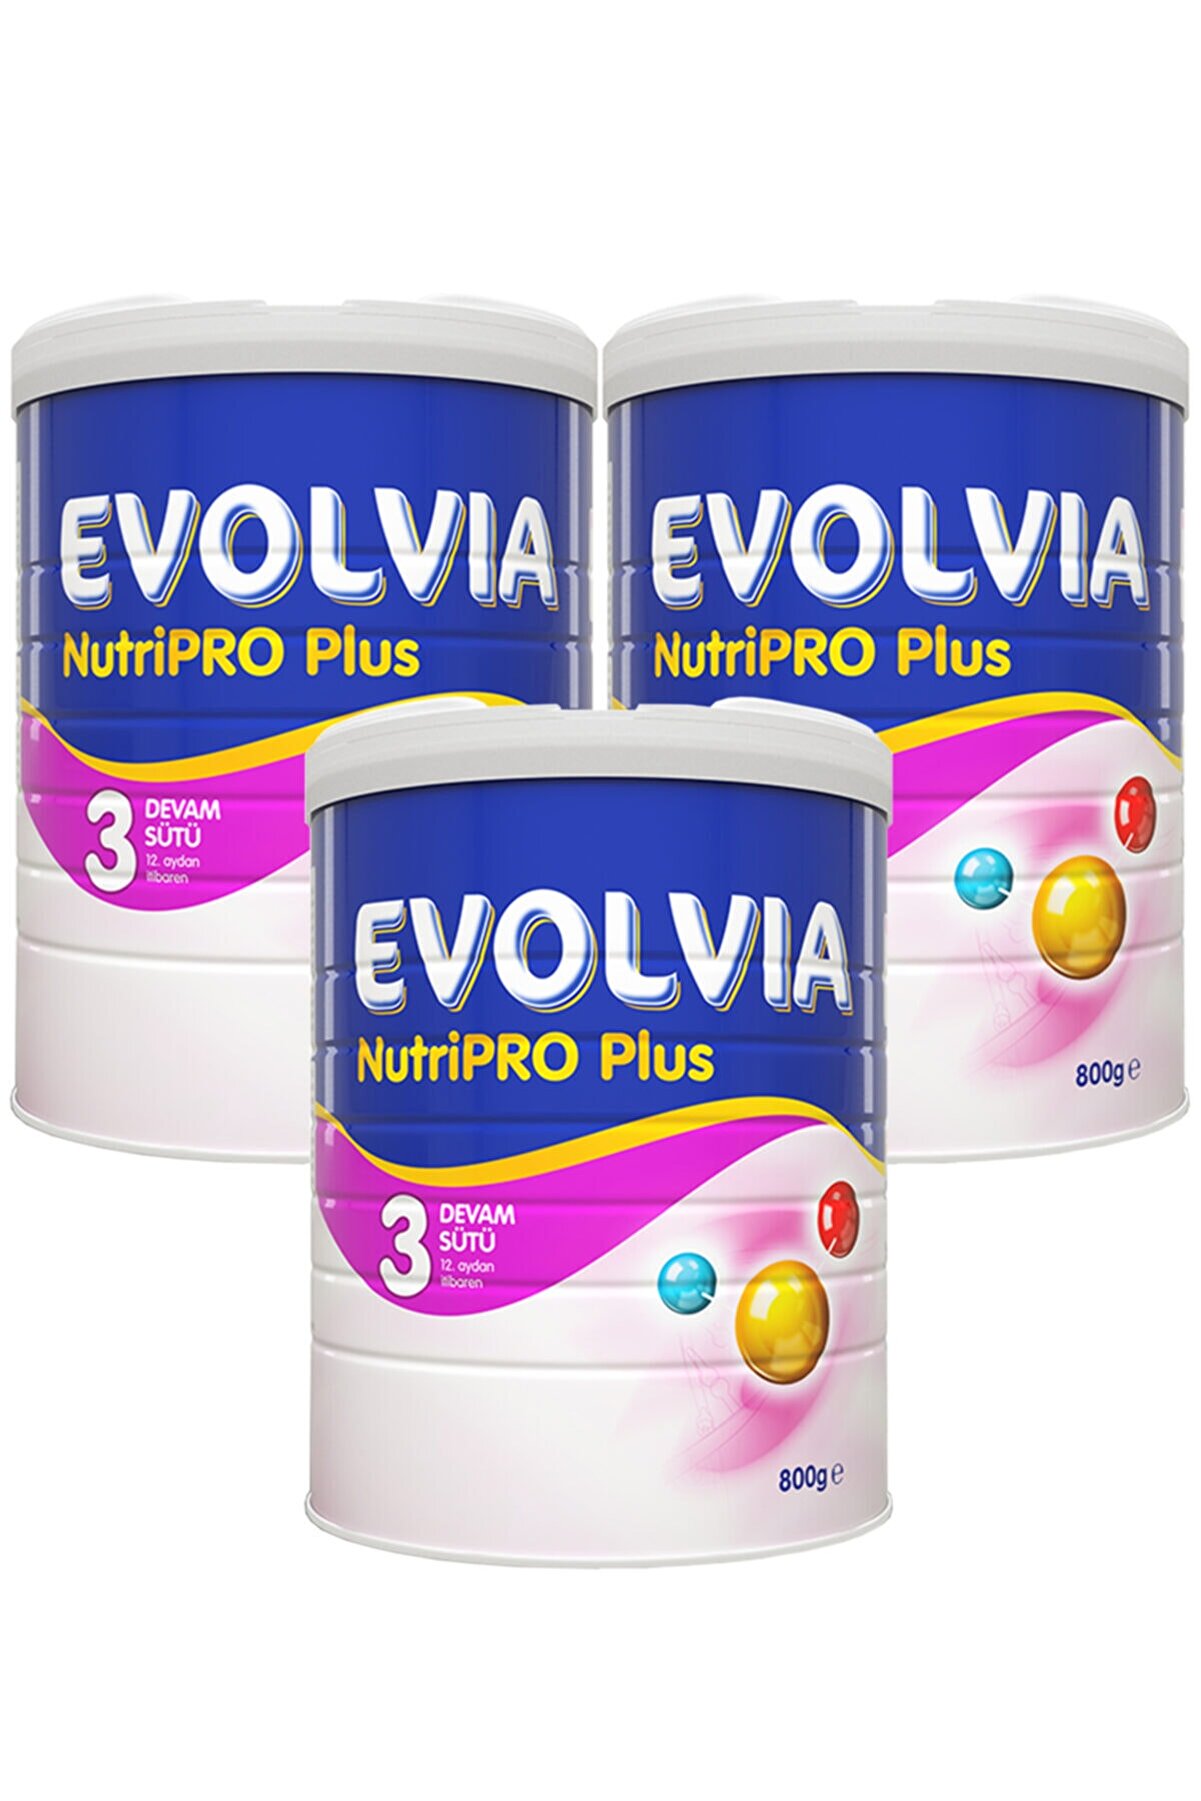 Evolvia 3 Devam Sütü Nutripro Plus 800 gr X 3 Adet